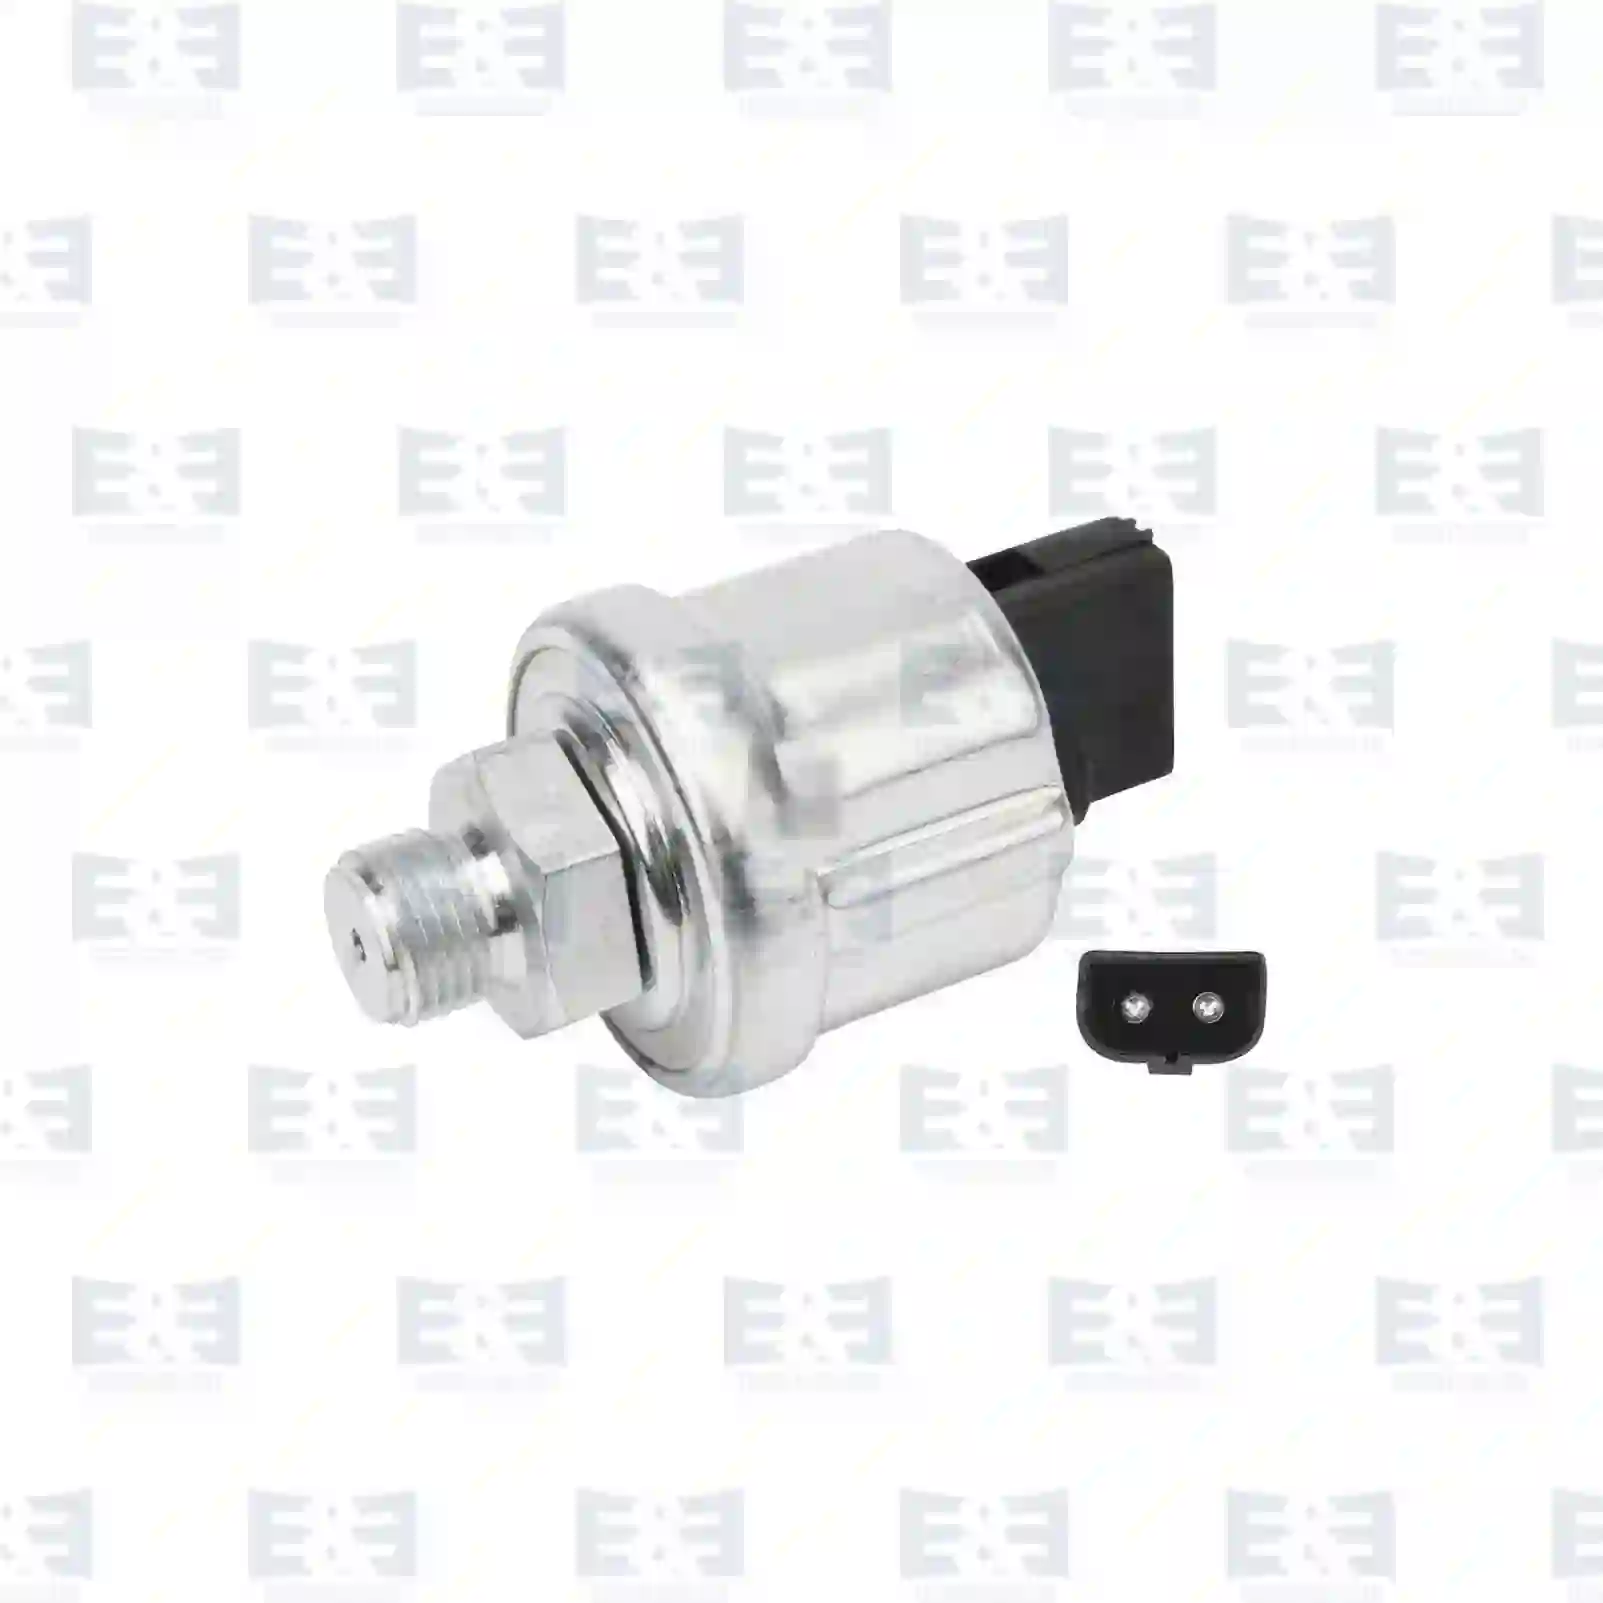 Cooling System Pressure sensor, EE No 2E2203487 ,  oem no:1594236, 3987498, ZG20722-0008 E&E Truck Spare Parts | Truck Spare Parts, Auotomotive Spare Parts